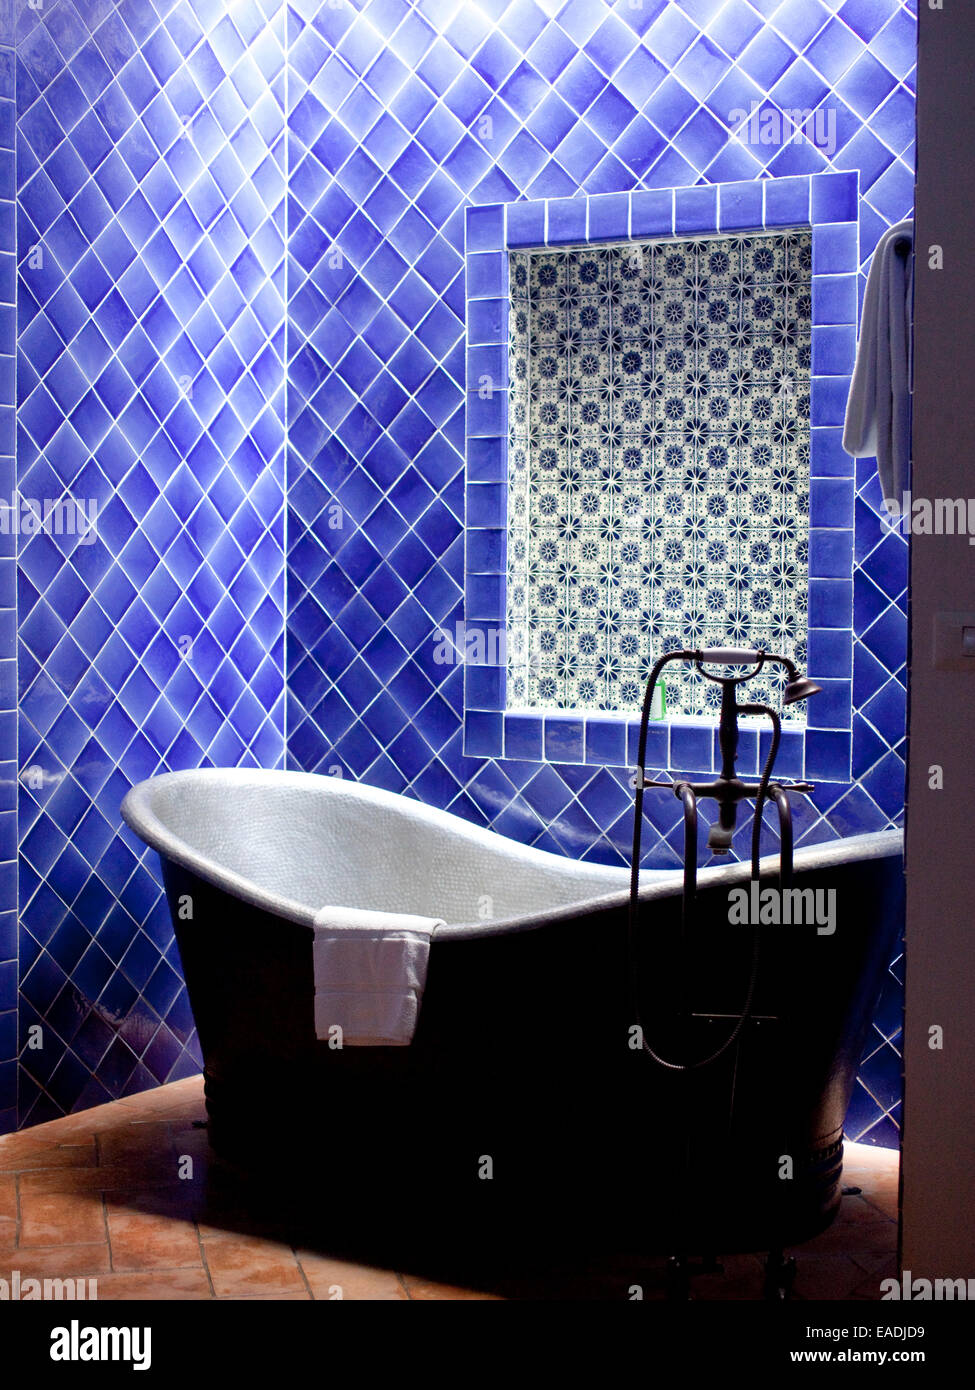 Metal Bath tub In Blue Tiled  Bathroom Stock Photo